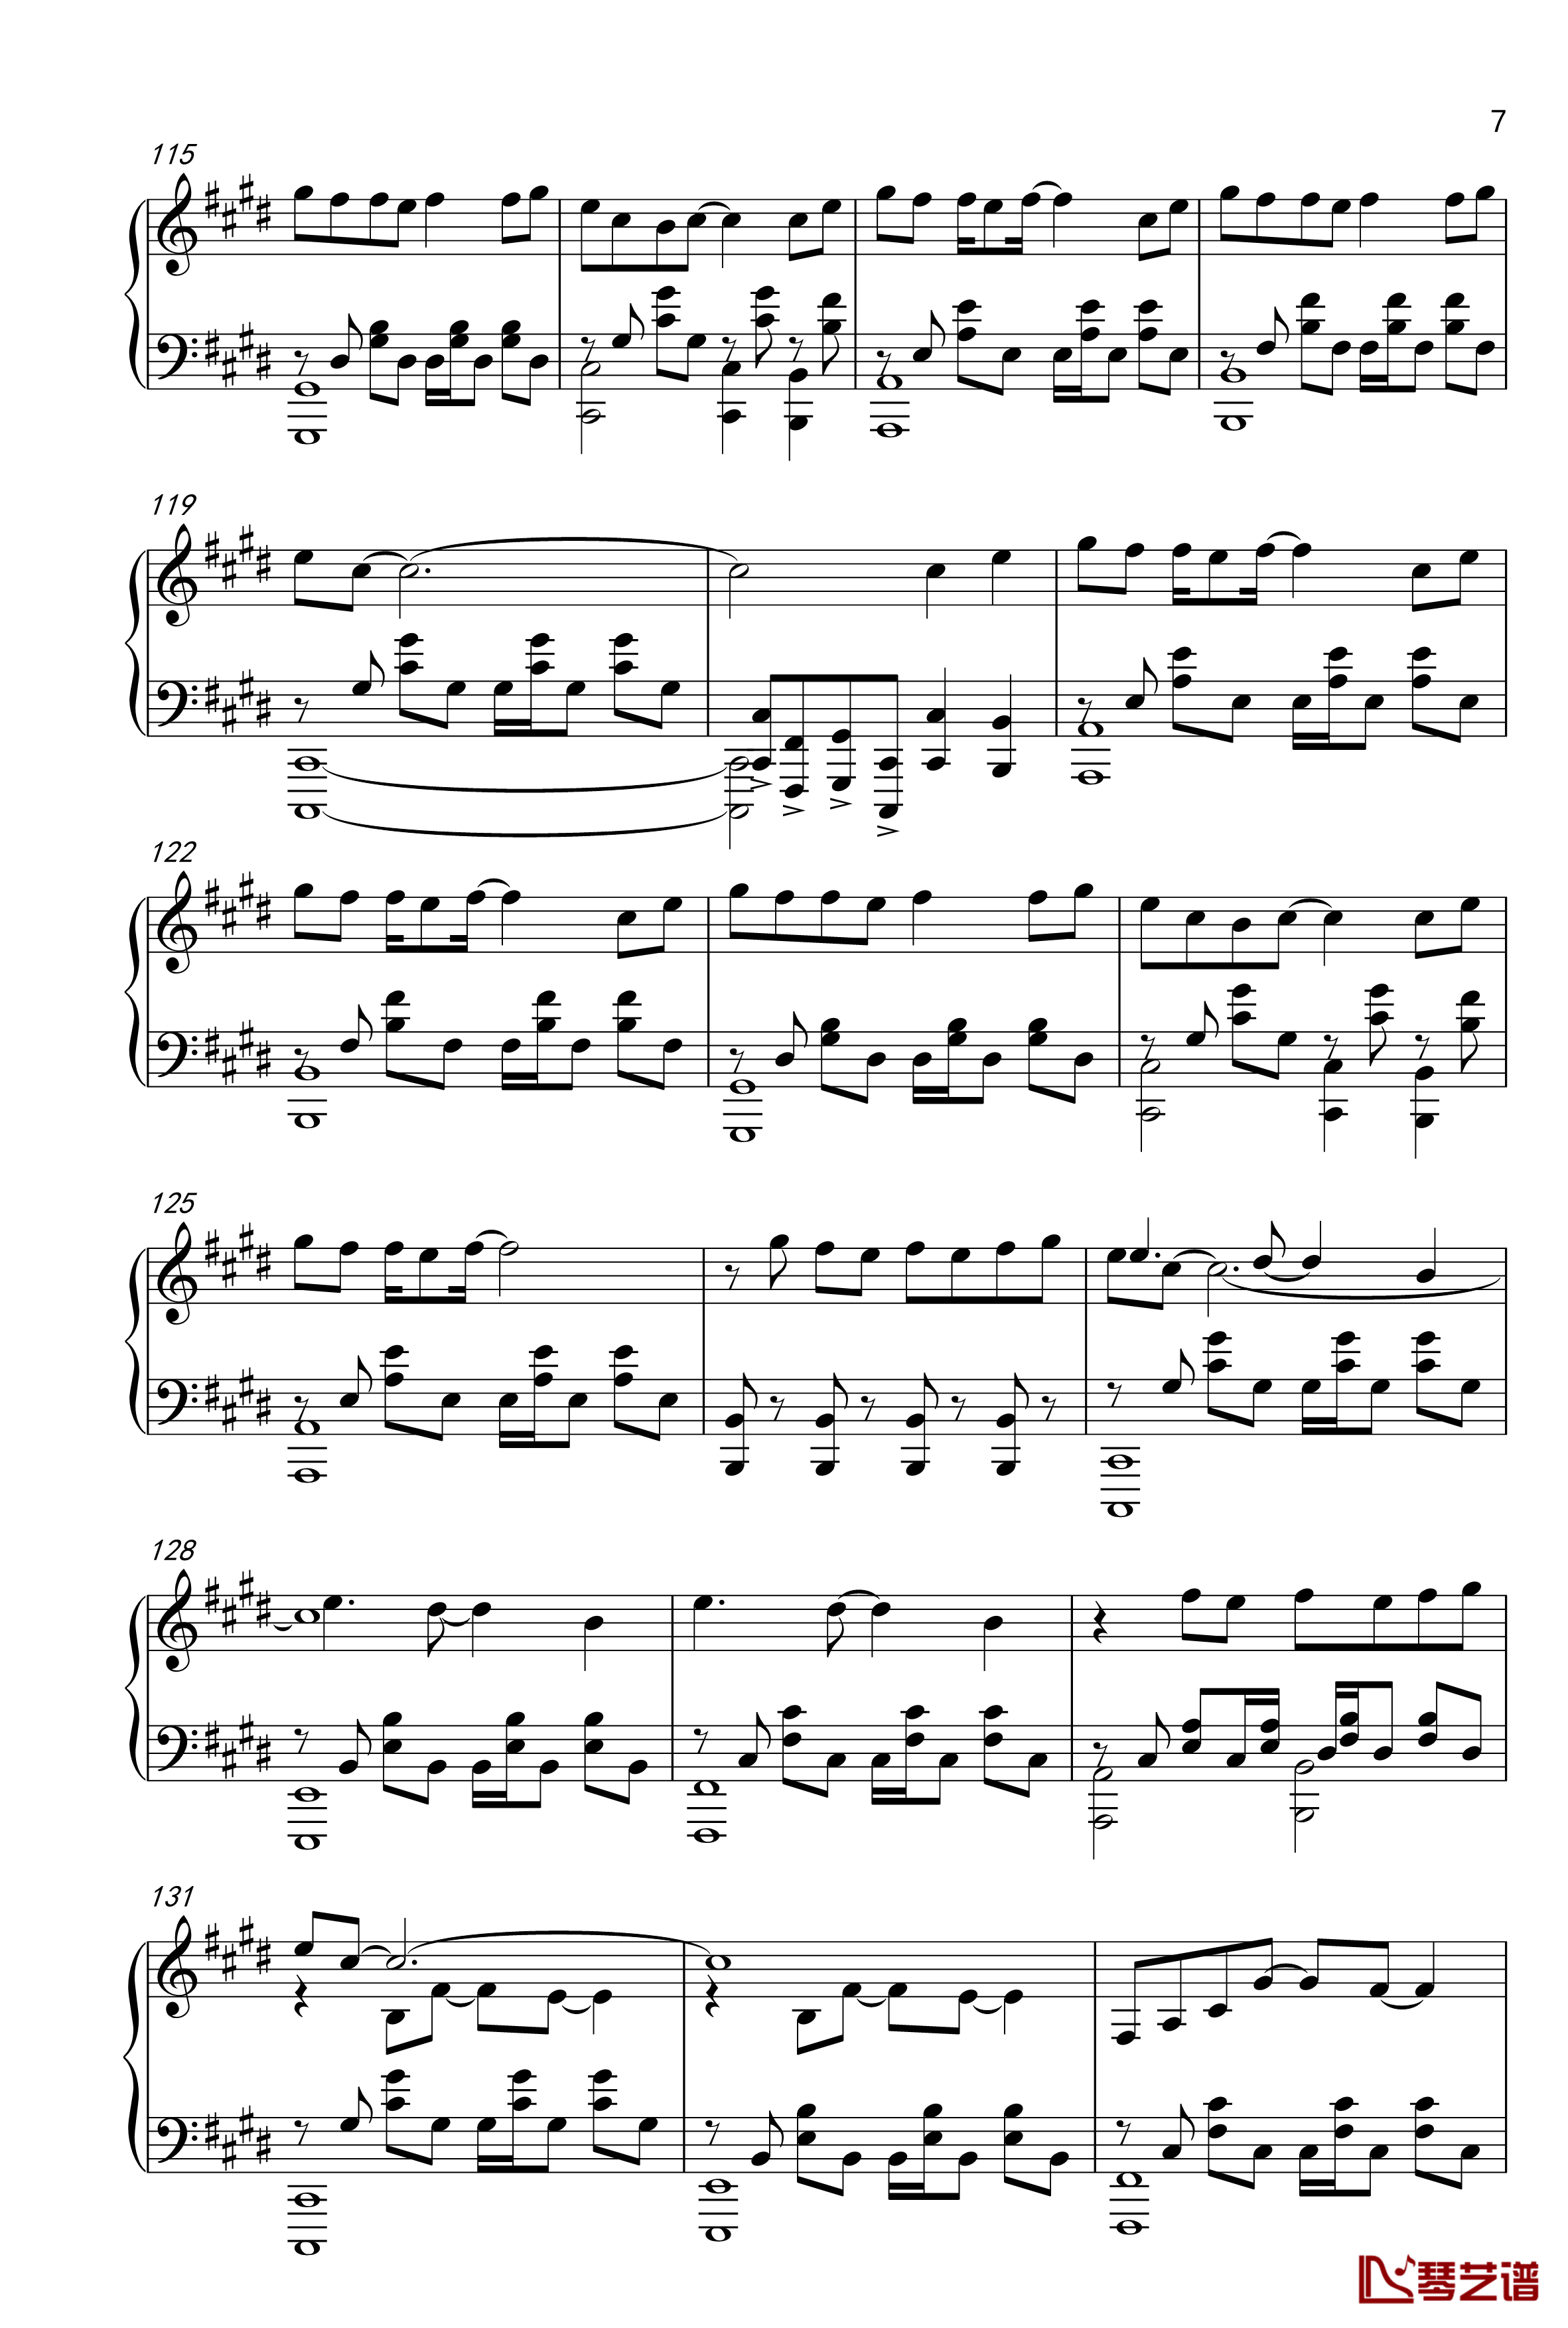 OVERLAP 钢琴谱-《游戏王》第一部190-224话OP-游戏王7